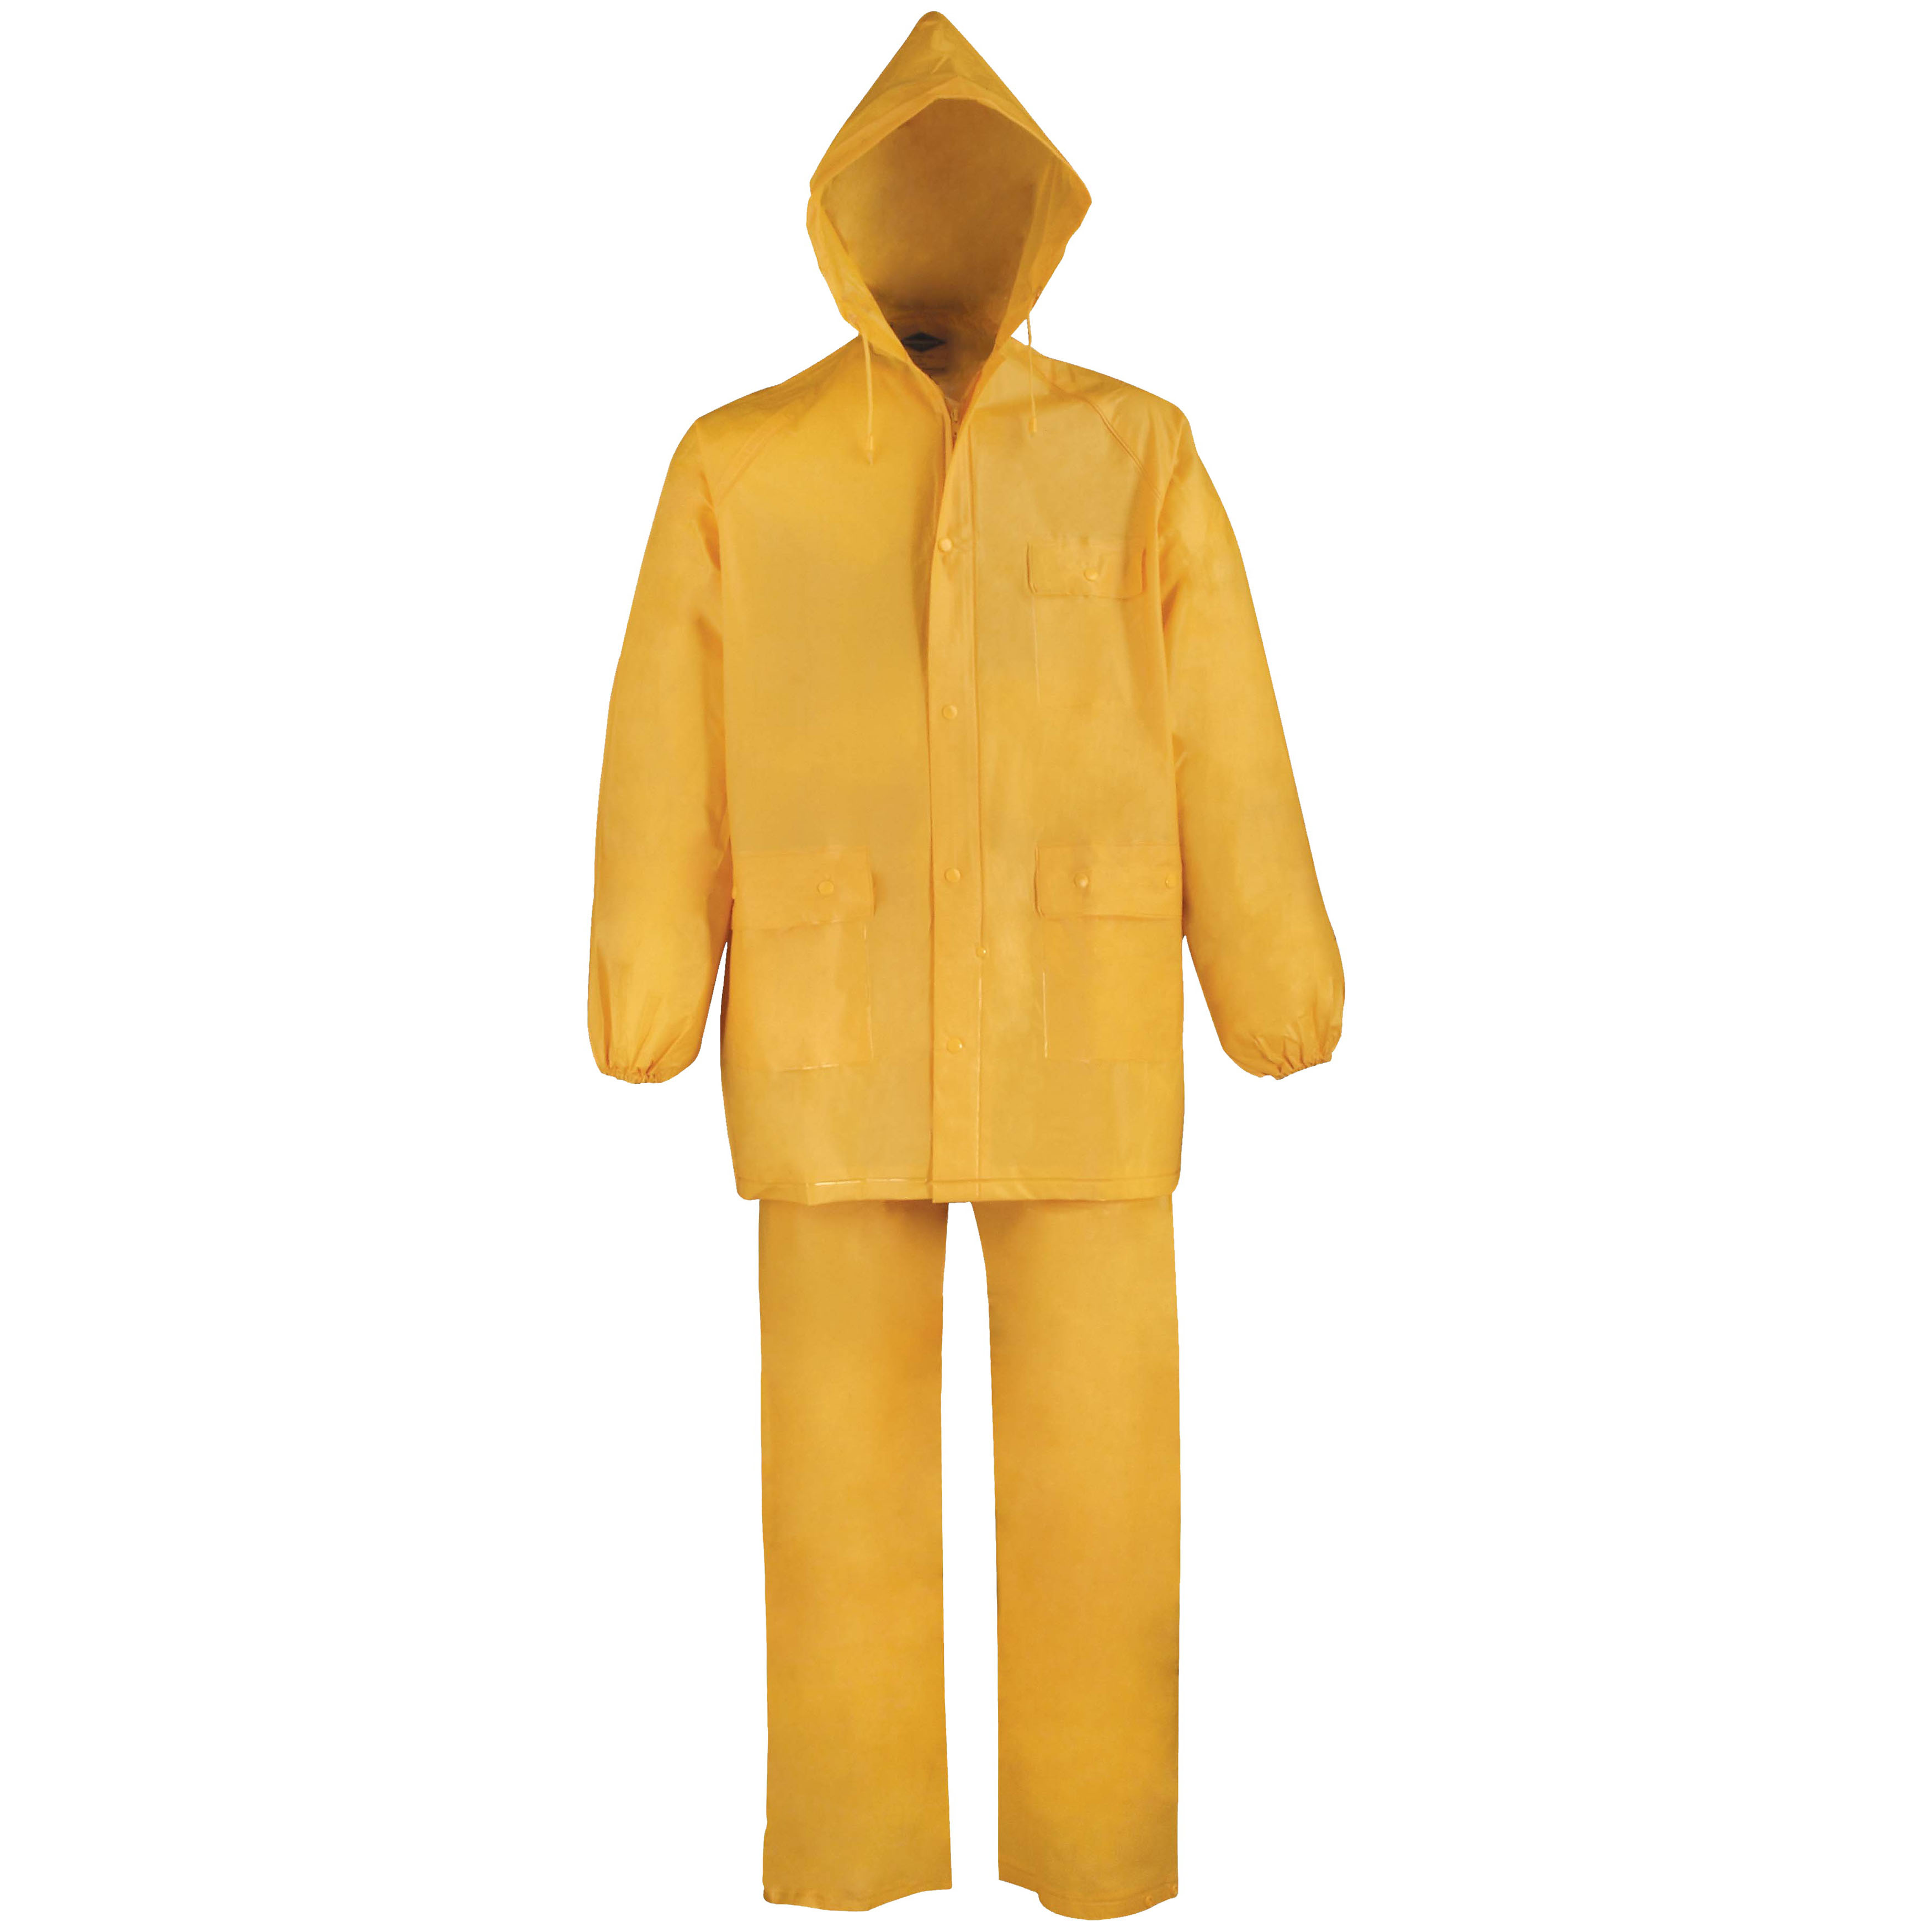 8127XL Rain Suit, XL, 30-1/2 in Inseam, PVC, Yellow, Drawstring Collar, Zipper with Storm Flap Closure